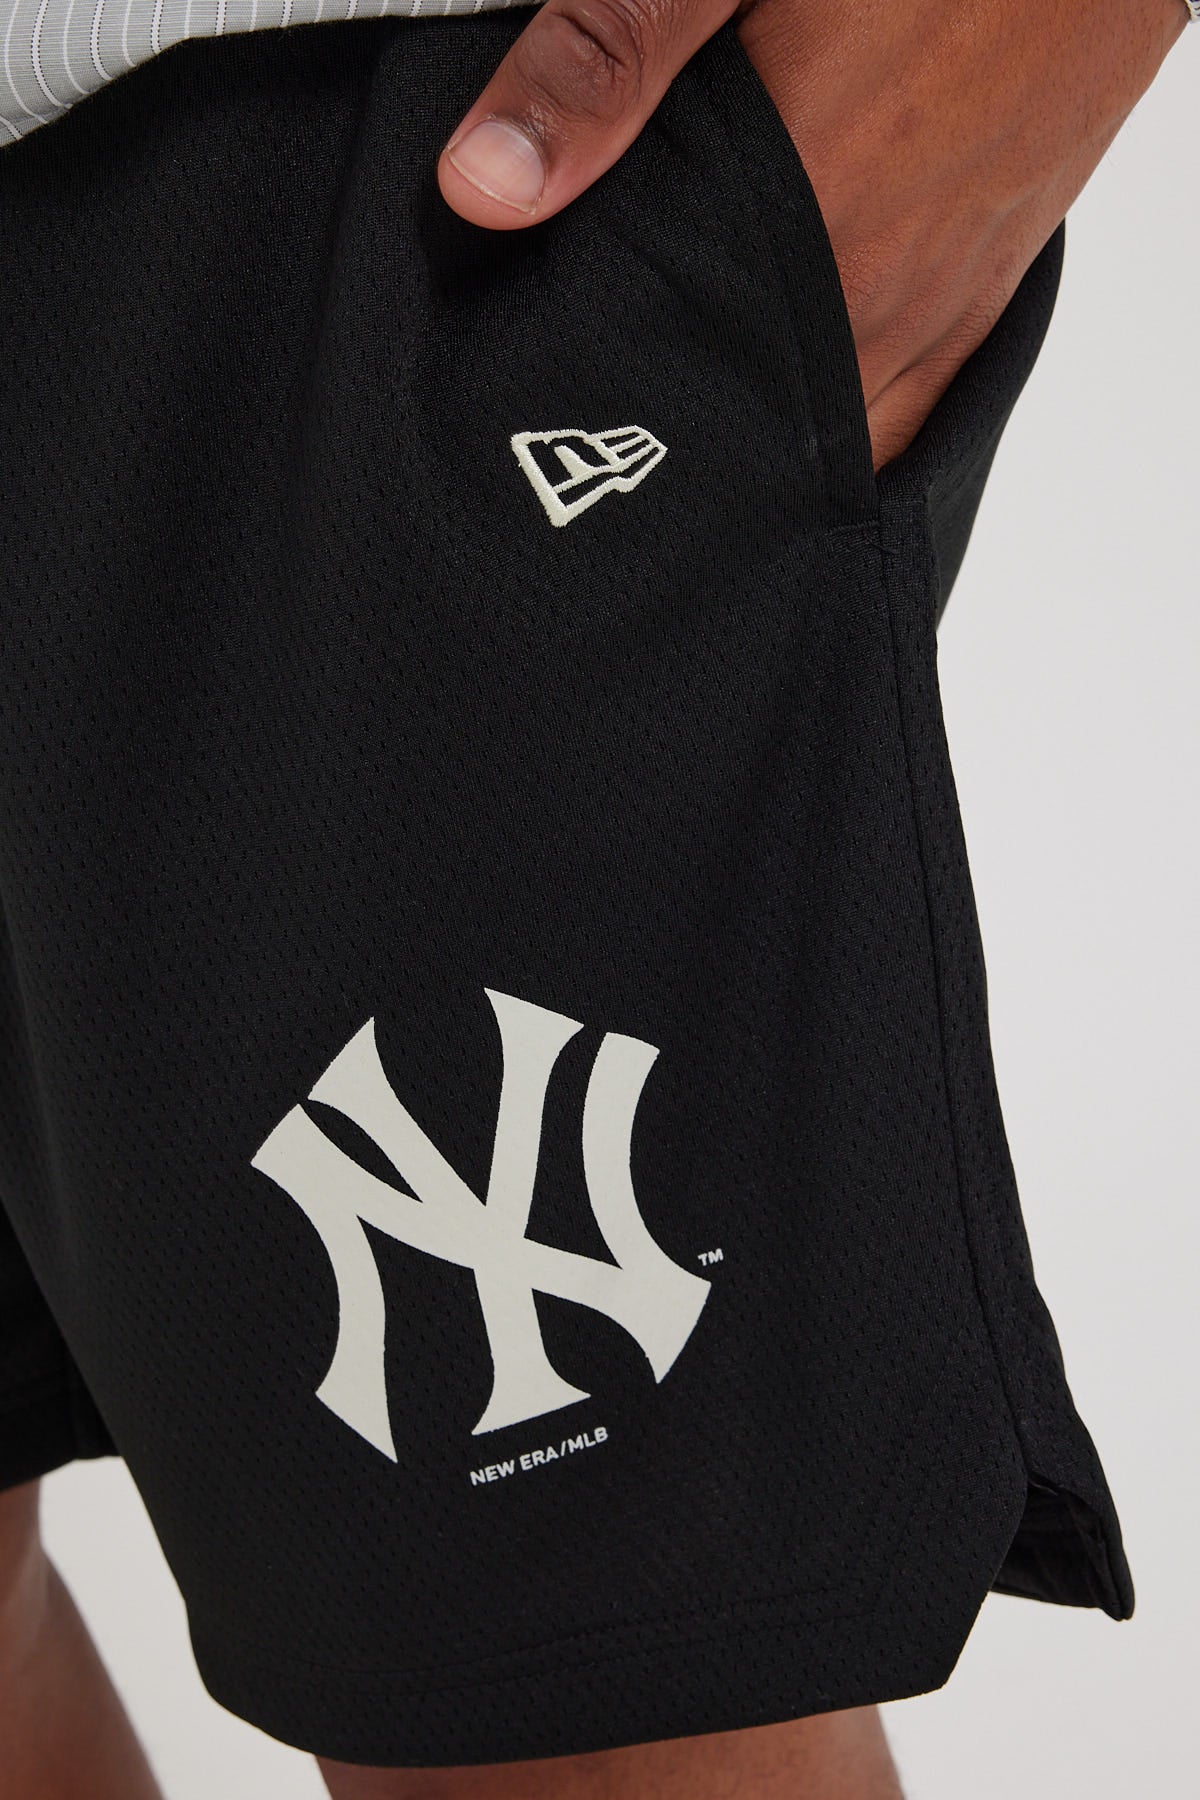 New Era Champs Shorts New York Yankees Black, Off White